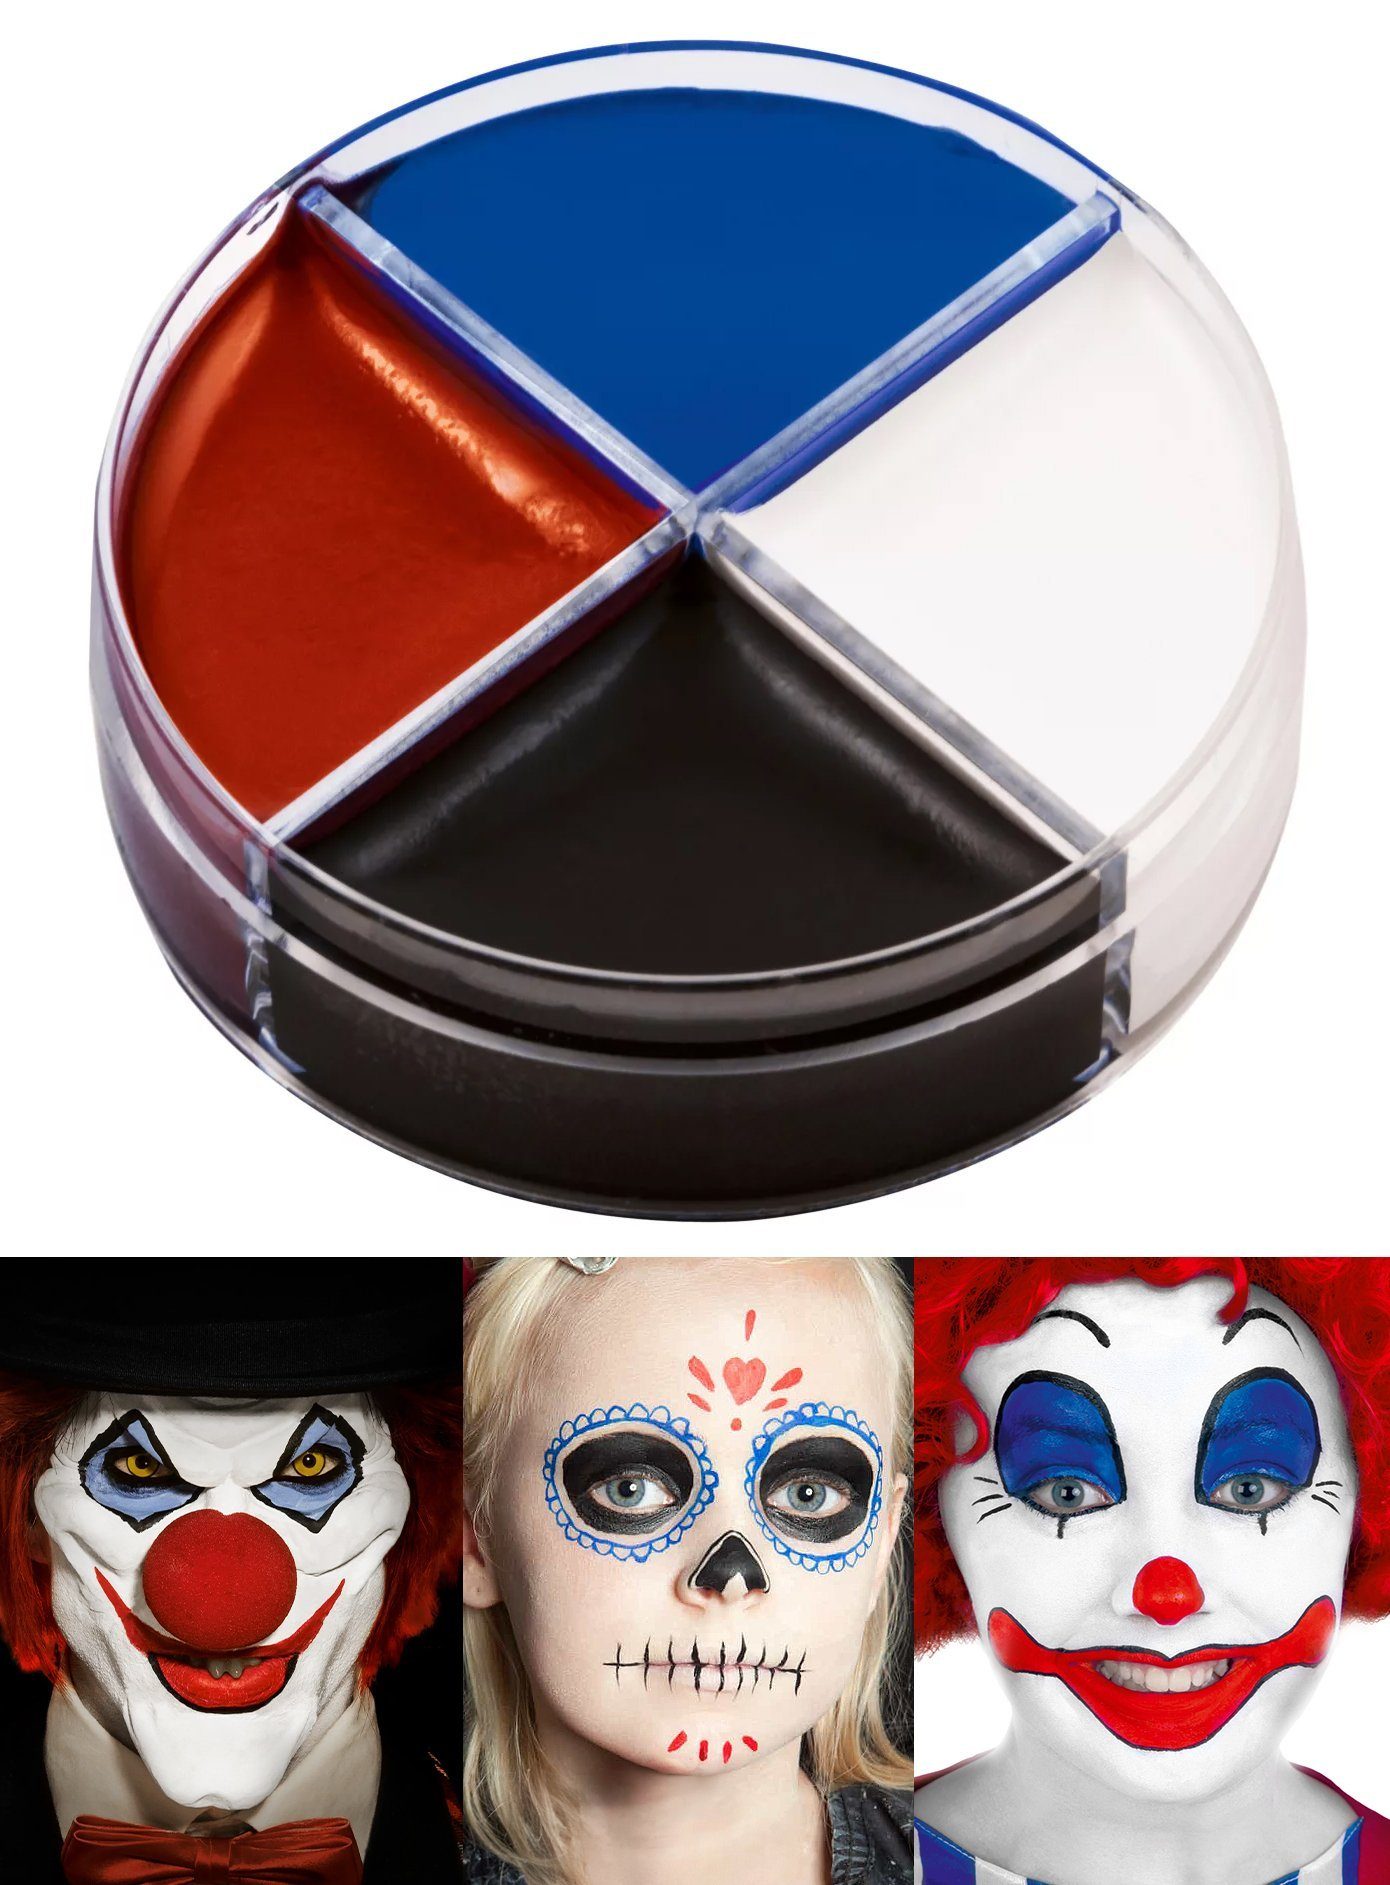 Maskworld Theaterschminke Creme Schminke Clown blau-rot-schwarz-weiß 15ml, Theaterschminke & Halloween Make-up in hochwertiger Qualität